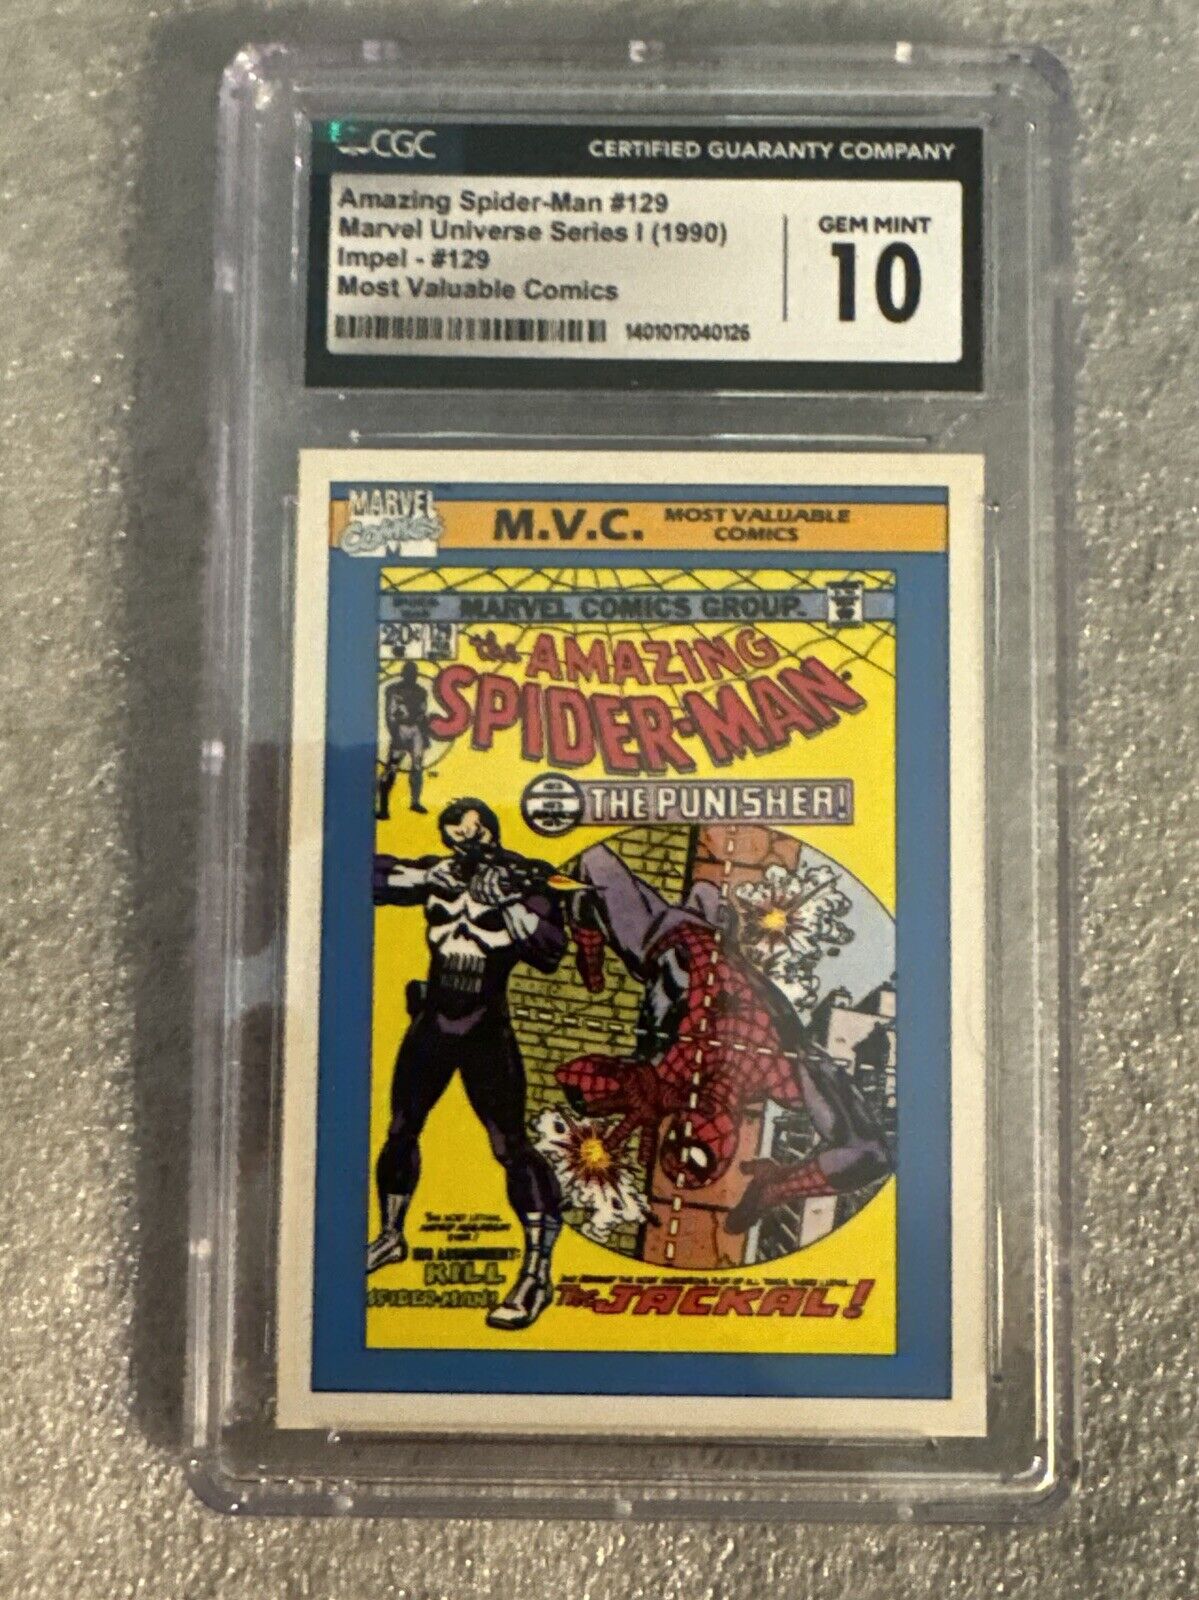 1990 Impel Marvel Universe Amazing Spider-Man #129 CGC 10 Gem Mint Card